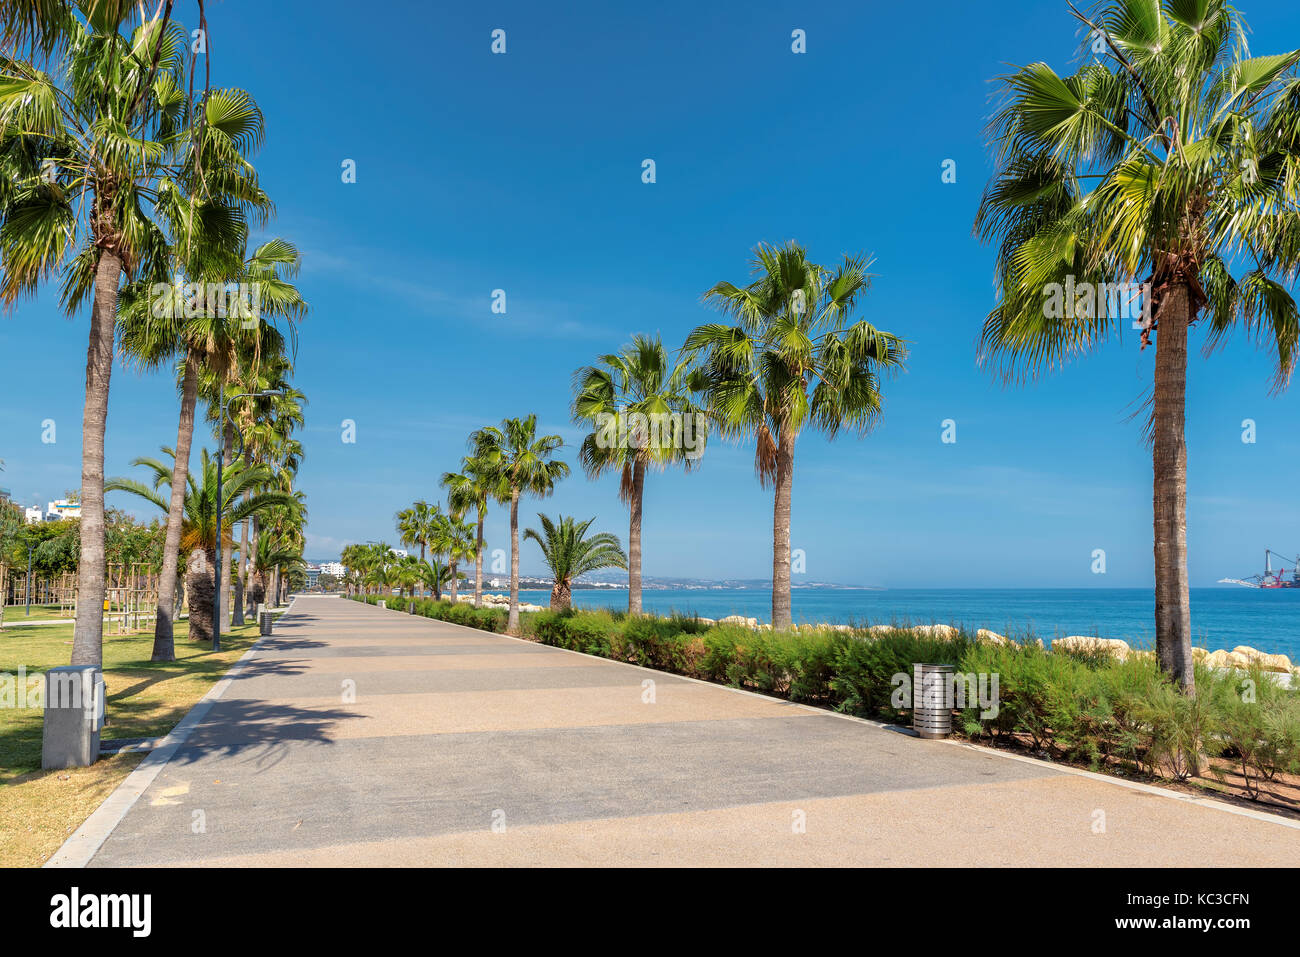 Limassol, Cyprus - Palm trees on Promenade alley. Stock Photo